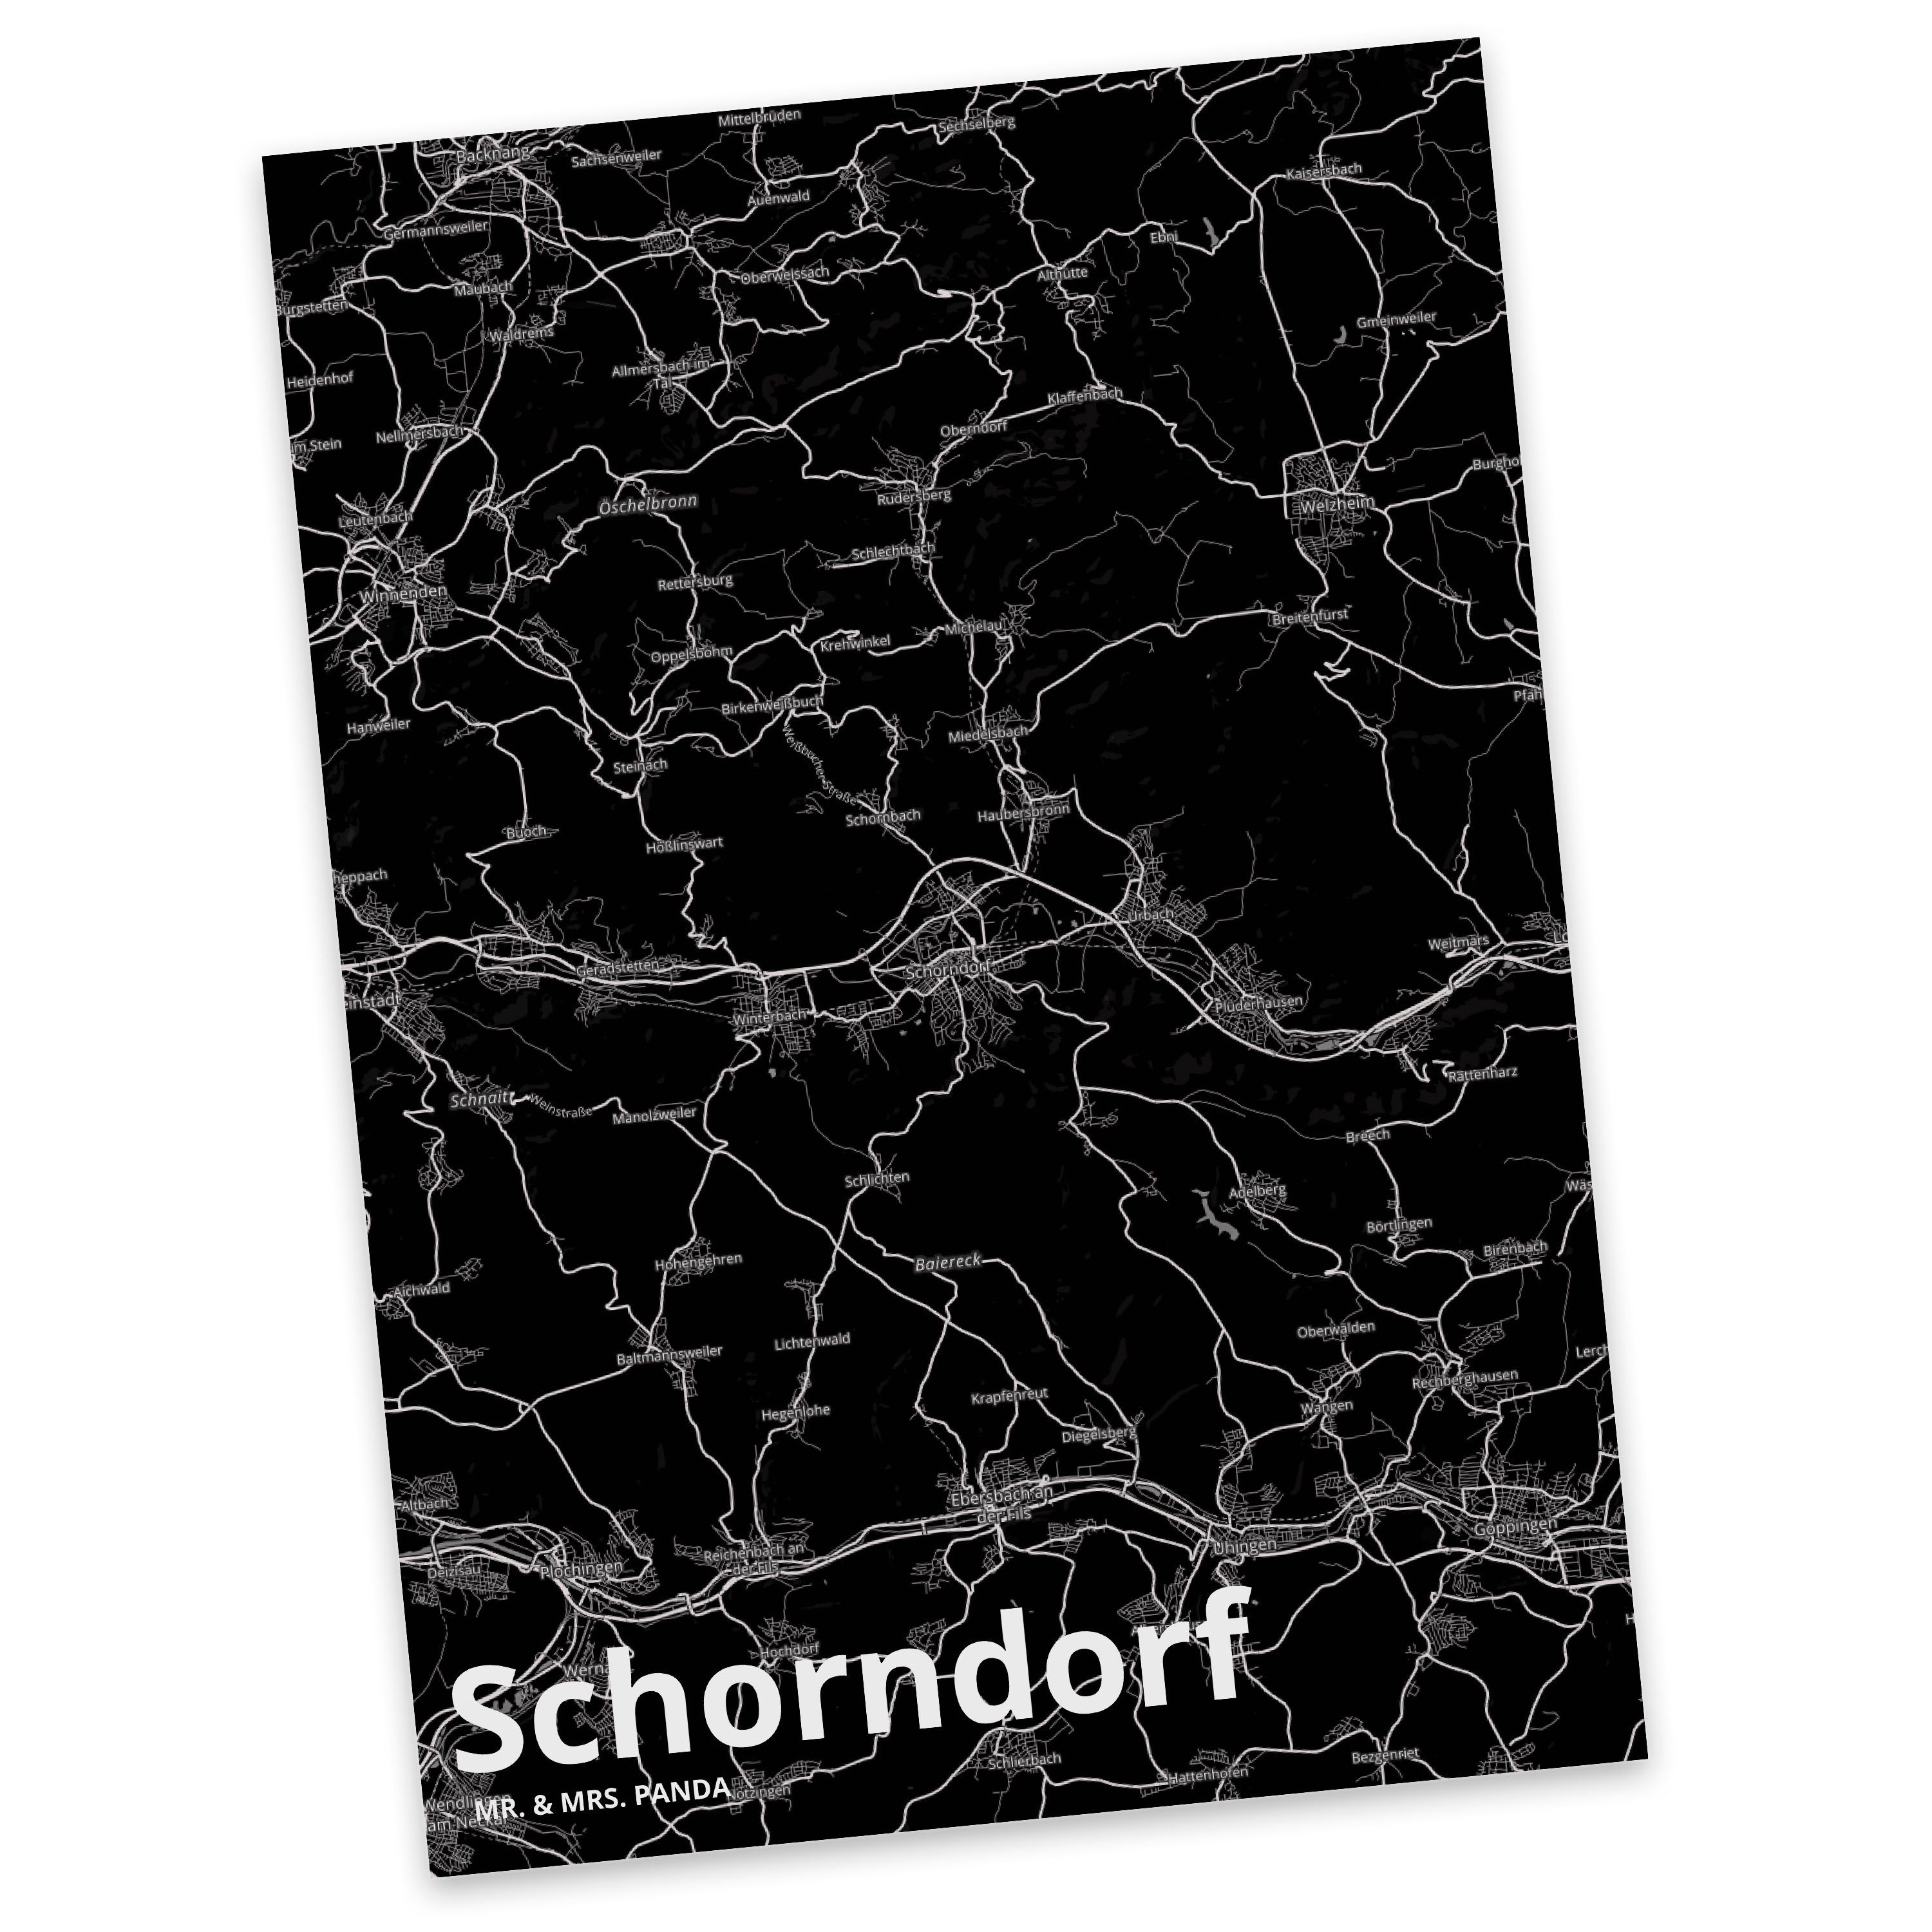 Mr. & Mrs. Panda Postkarte Schorndorf - Geschenk, Stadt, Ort, Stadt Dorf Karte Landkarte Map Sta